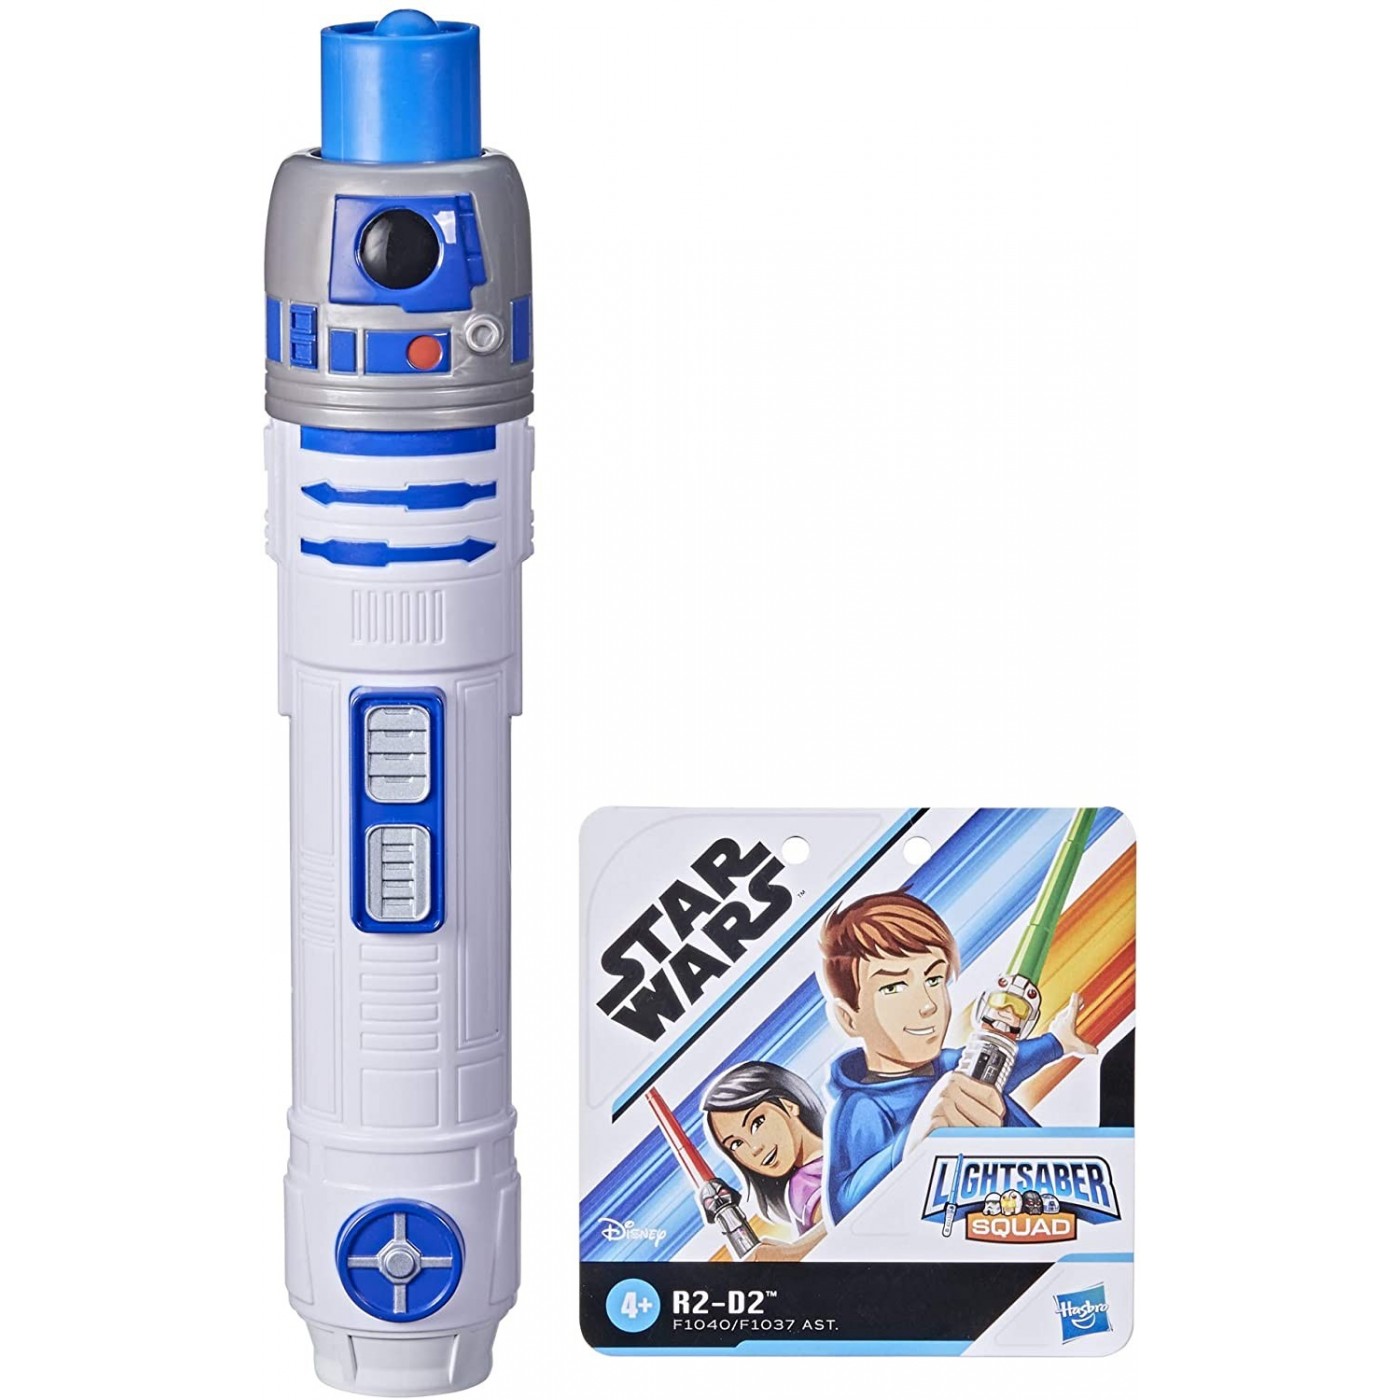 Hasbro Star Wars Lightsaber Squad R2-D2 Extendable Blue Lightsaber (F1037/F1040)